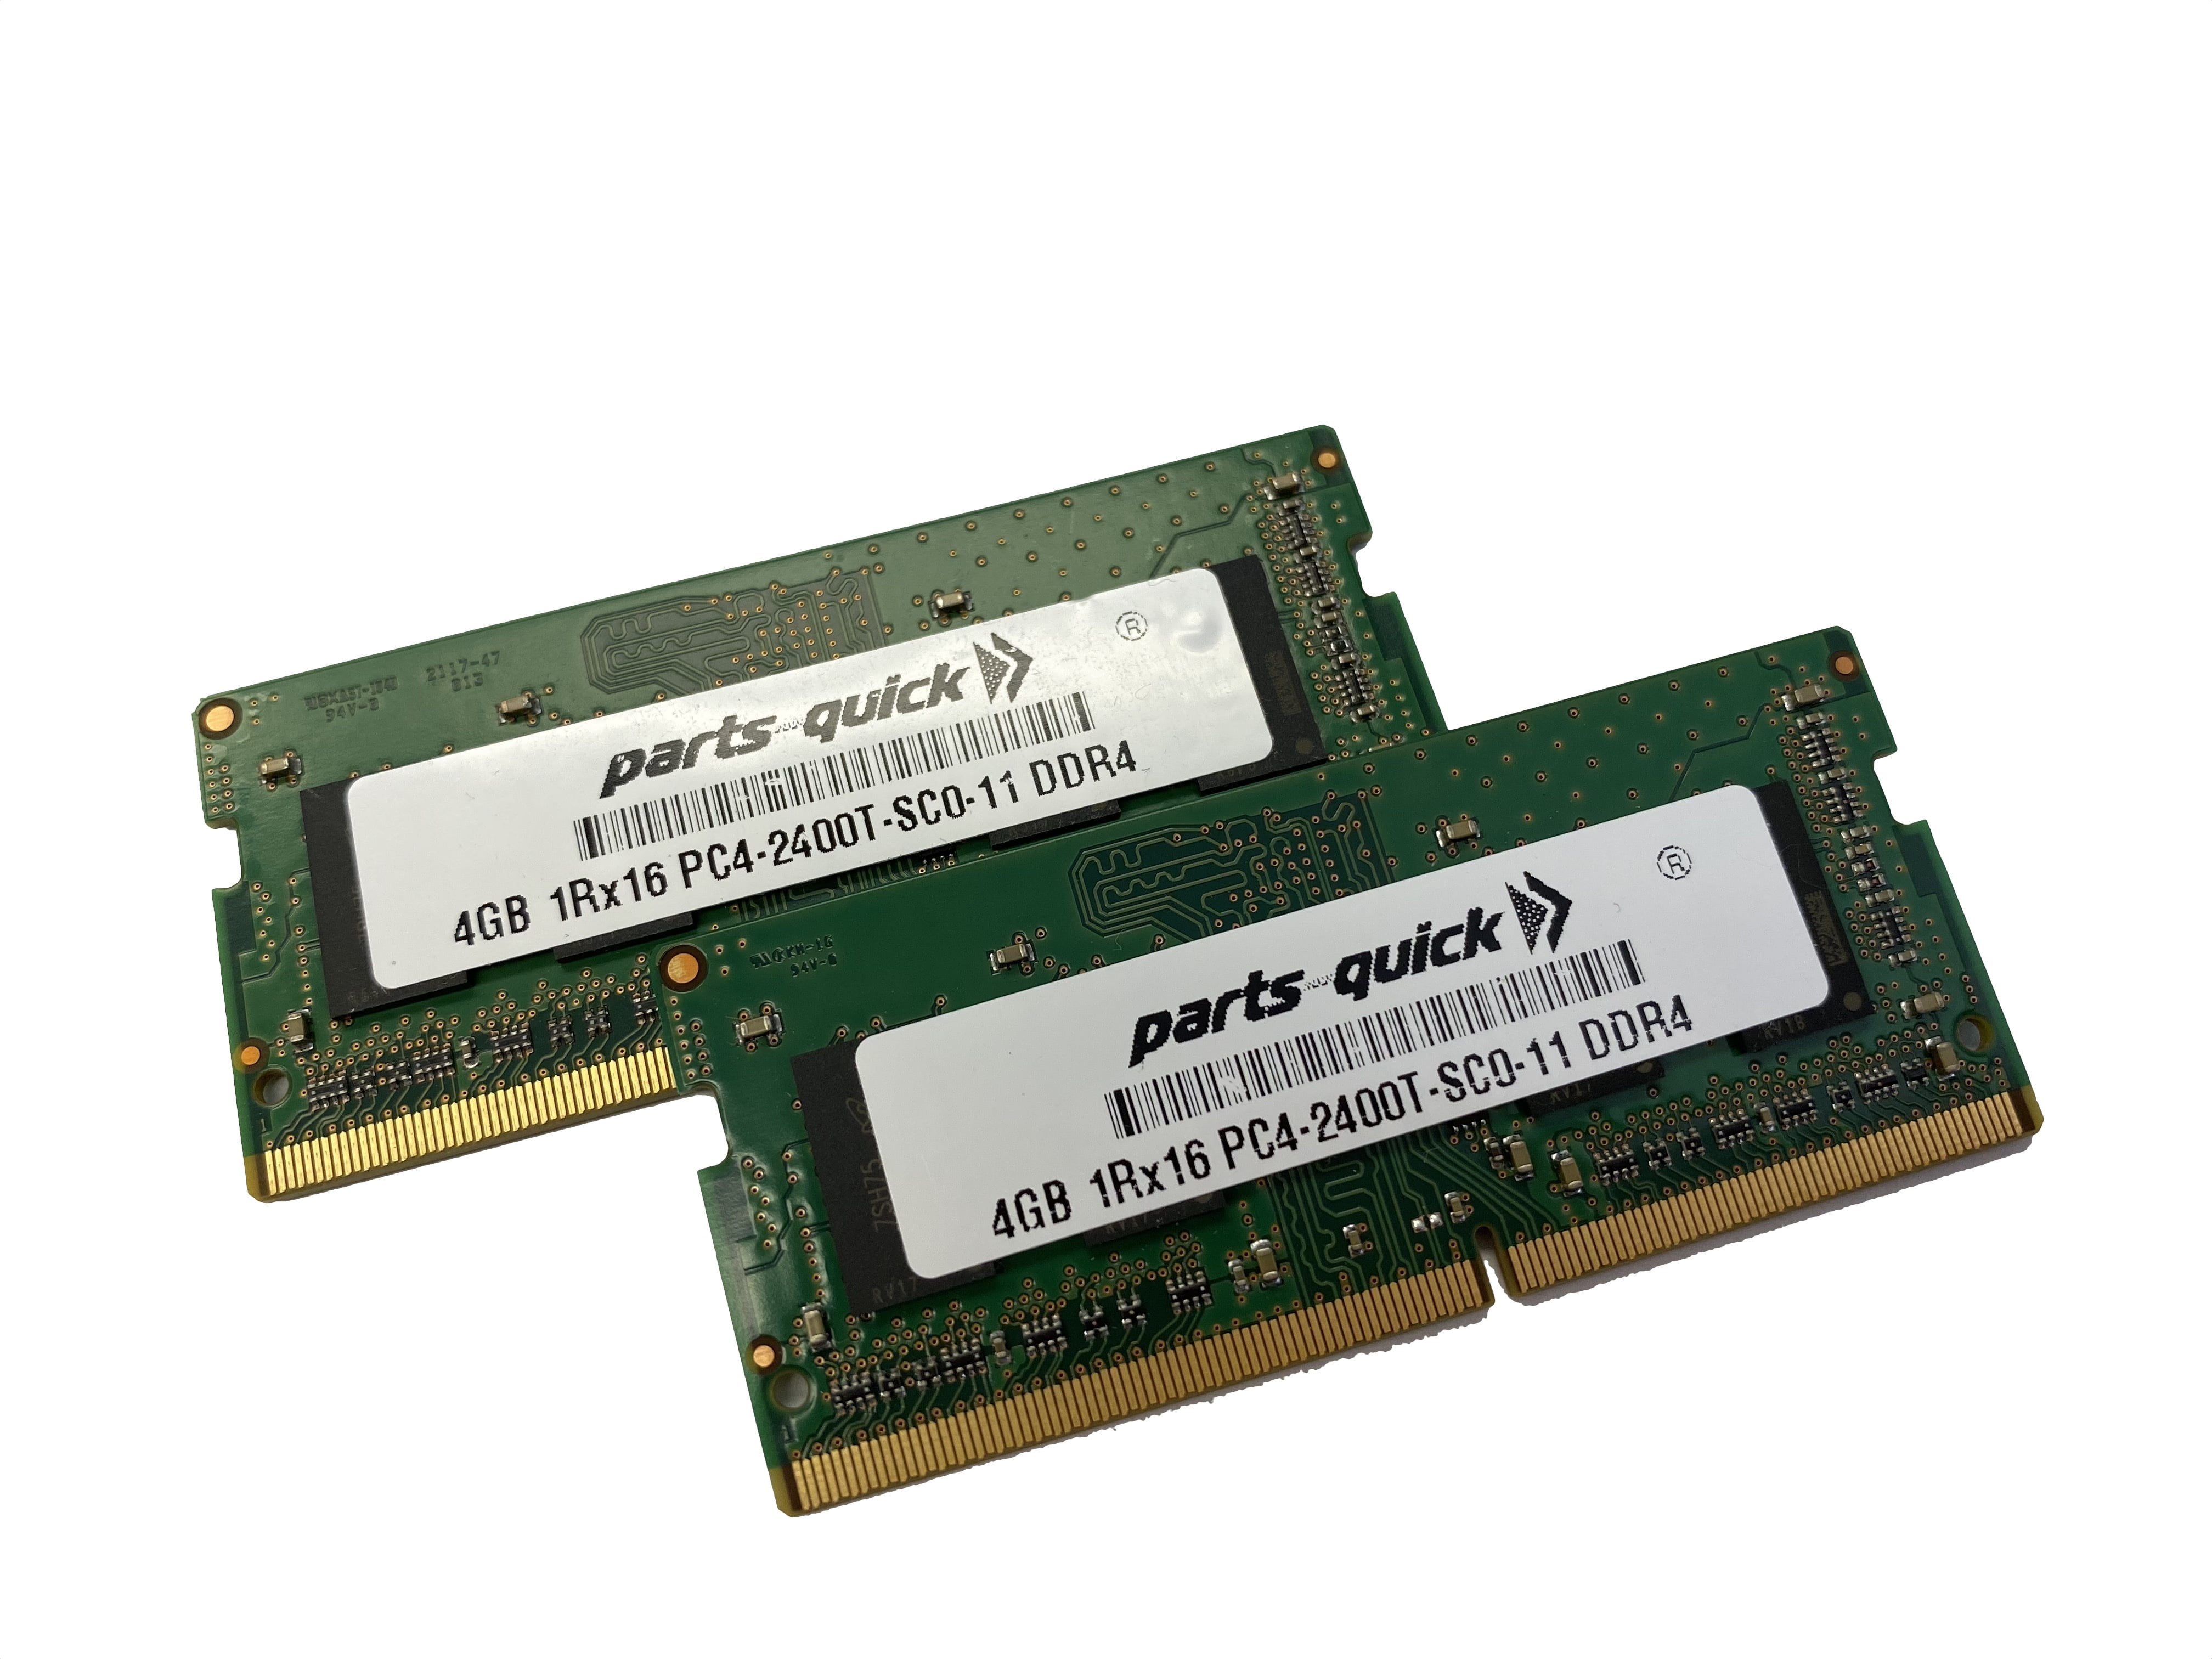 Græsse øjenvipper Fyrretræ parts-quick 8GB KIT (2 X 4GB ) DDR4 2400MHz 1RX16 PC4-2400T-SC0-11 SO-DIMM  Laptop Memory RAM Upgrade - Walmart.com